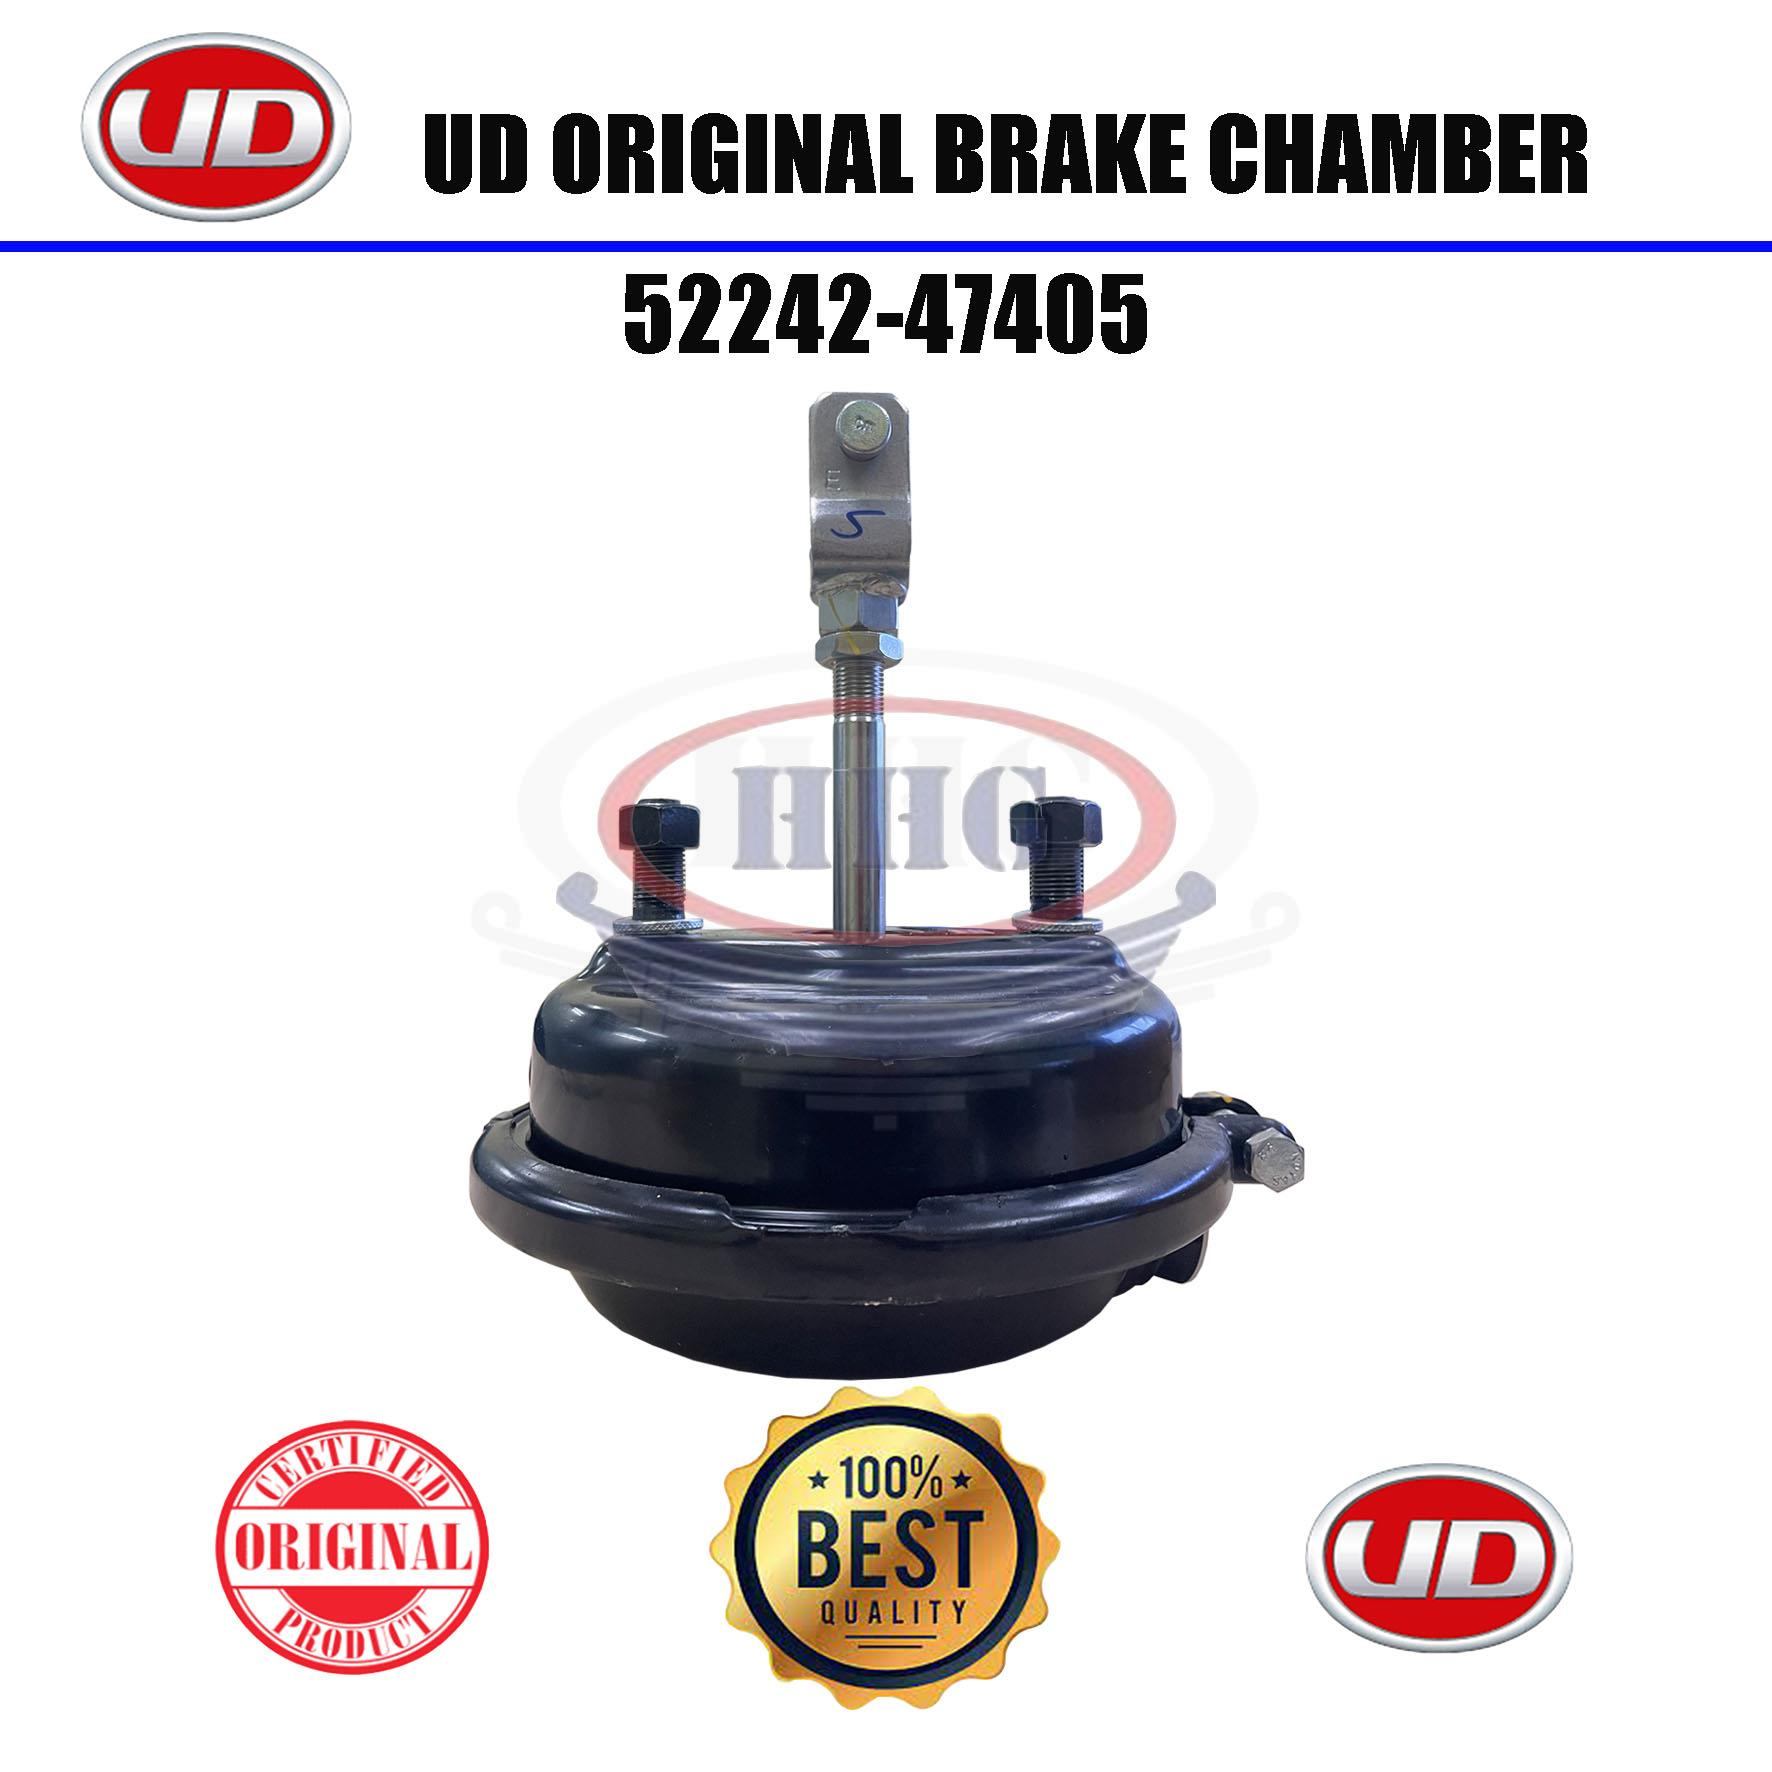 UD Original Brake Chamber (52242-47405)